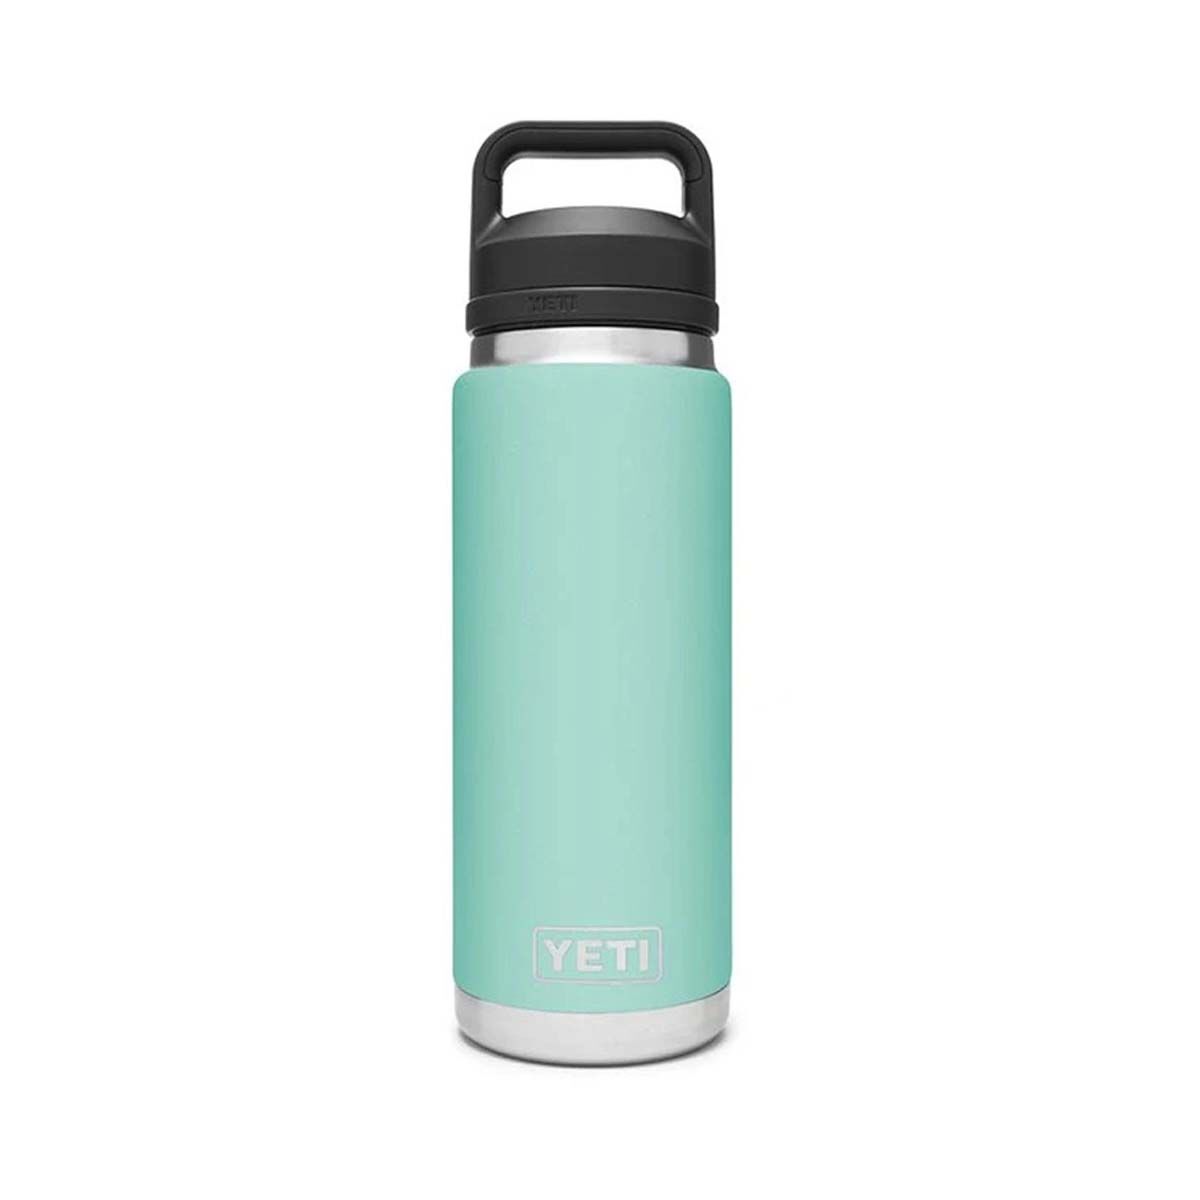 Straw Lid for Yeti Rambler Water Bottle 18 oz,26 oz,36 oz,46 oz,12 oz,64 oz,Stra